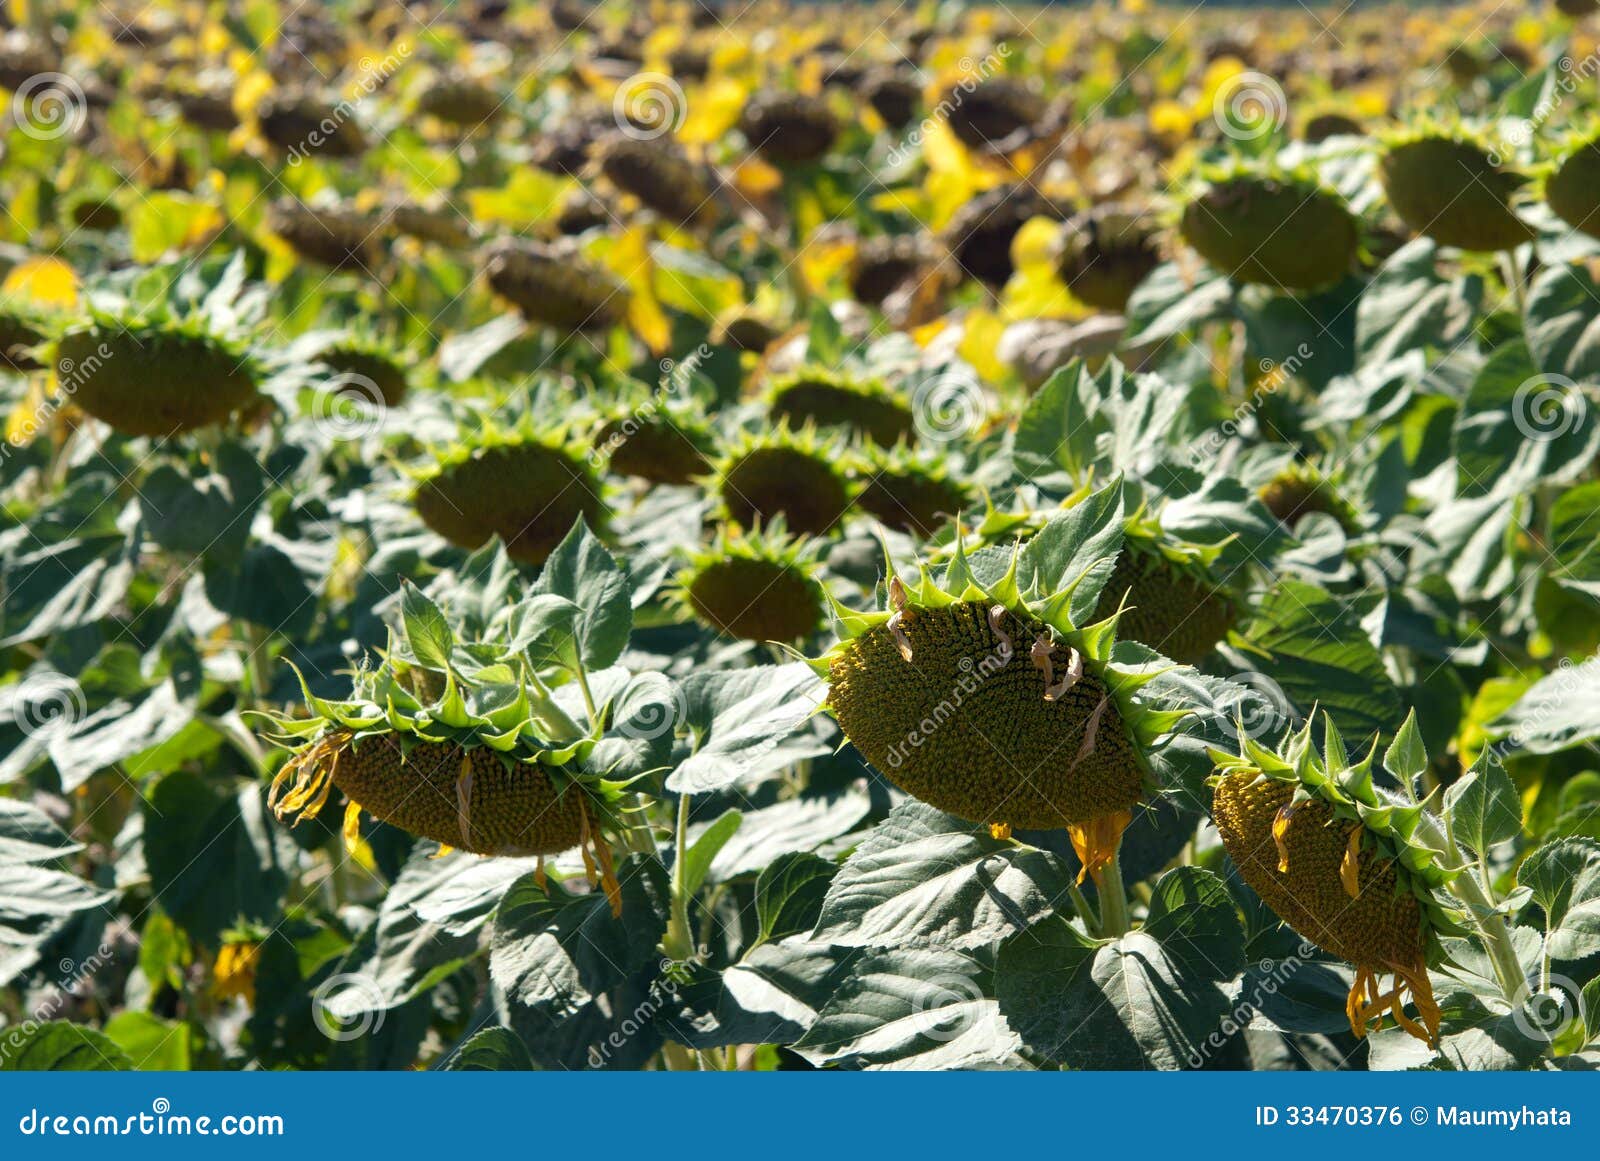 Sunflowers for harvest stock photo. Image of field, sunlight - 33470376